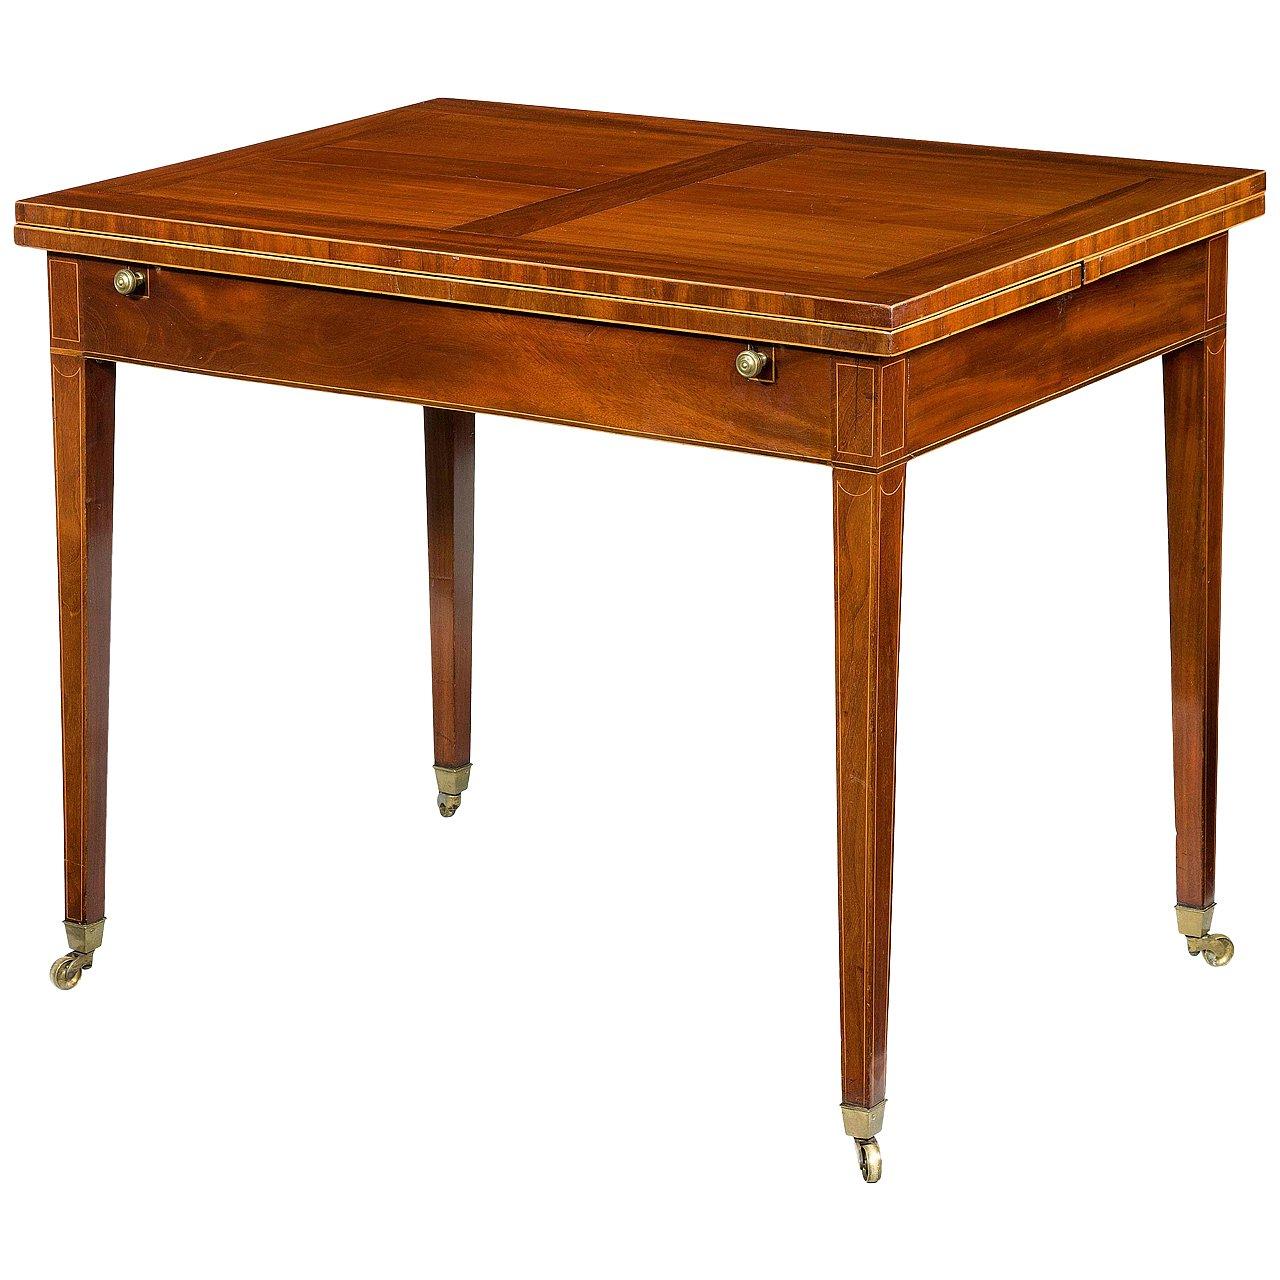 George III Period 'Universal' Table